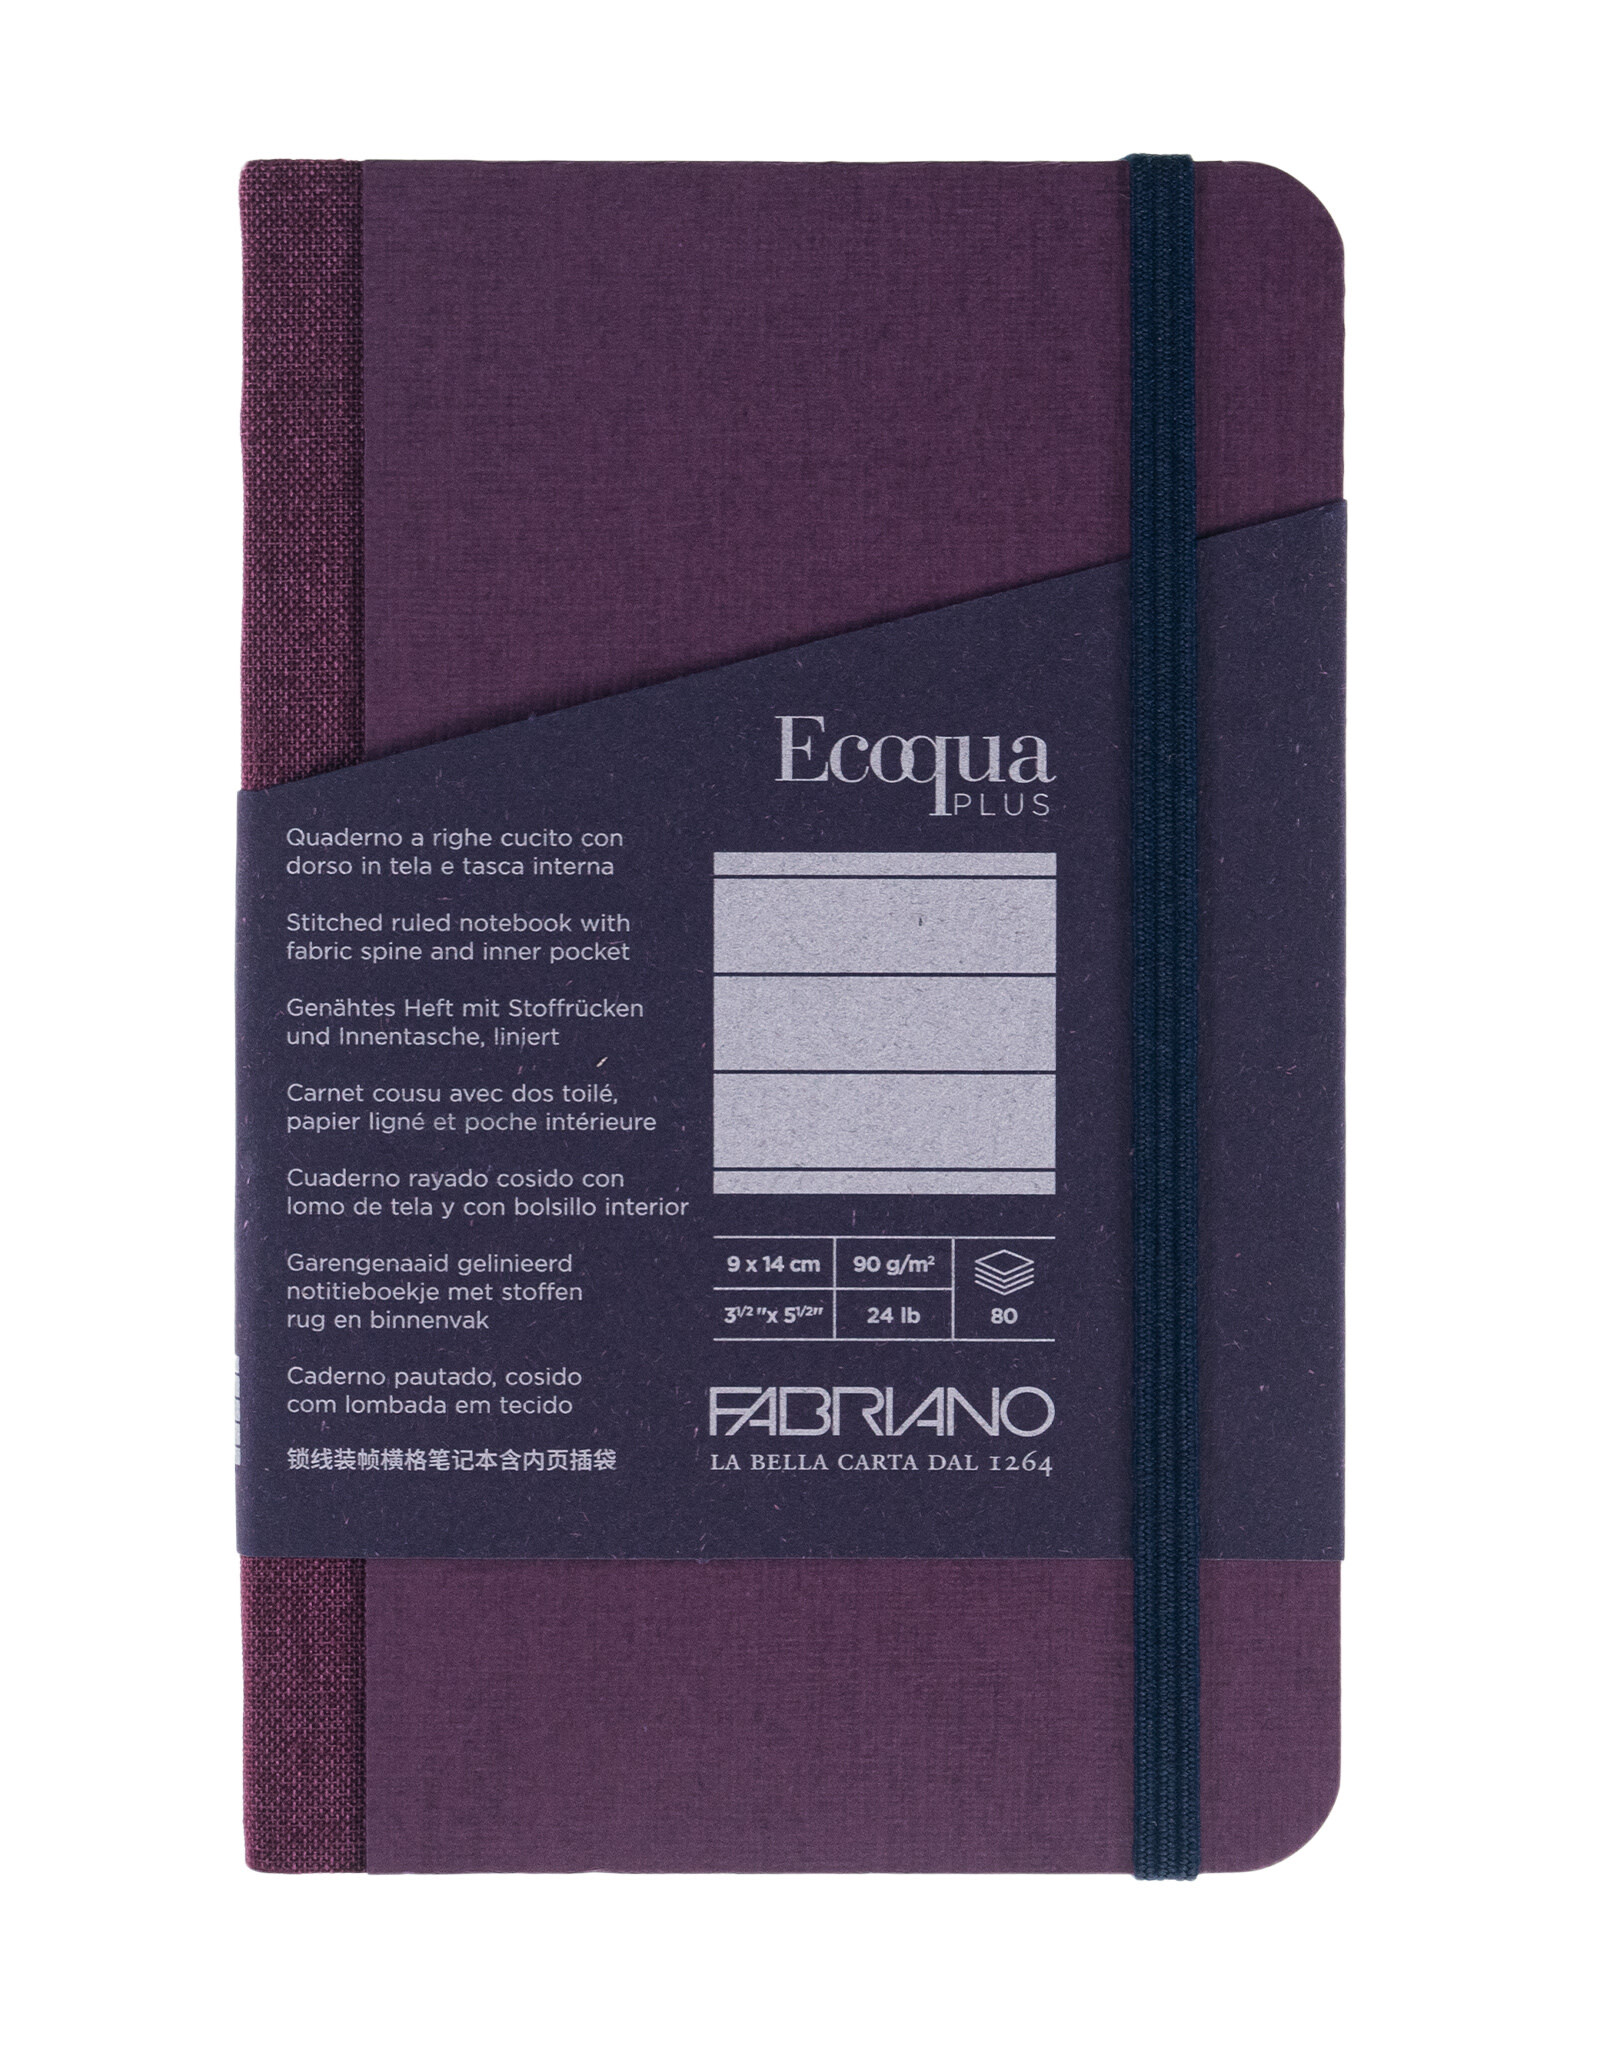 Ecoqua Plus Fabric Bound Notebook, Wine, 3.5” x 5.5”, Ruled